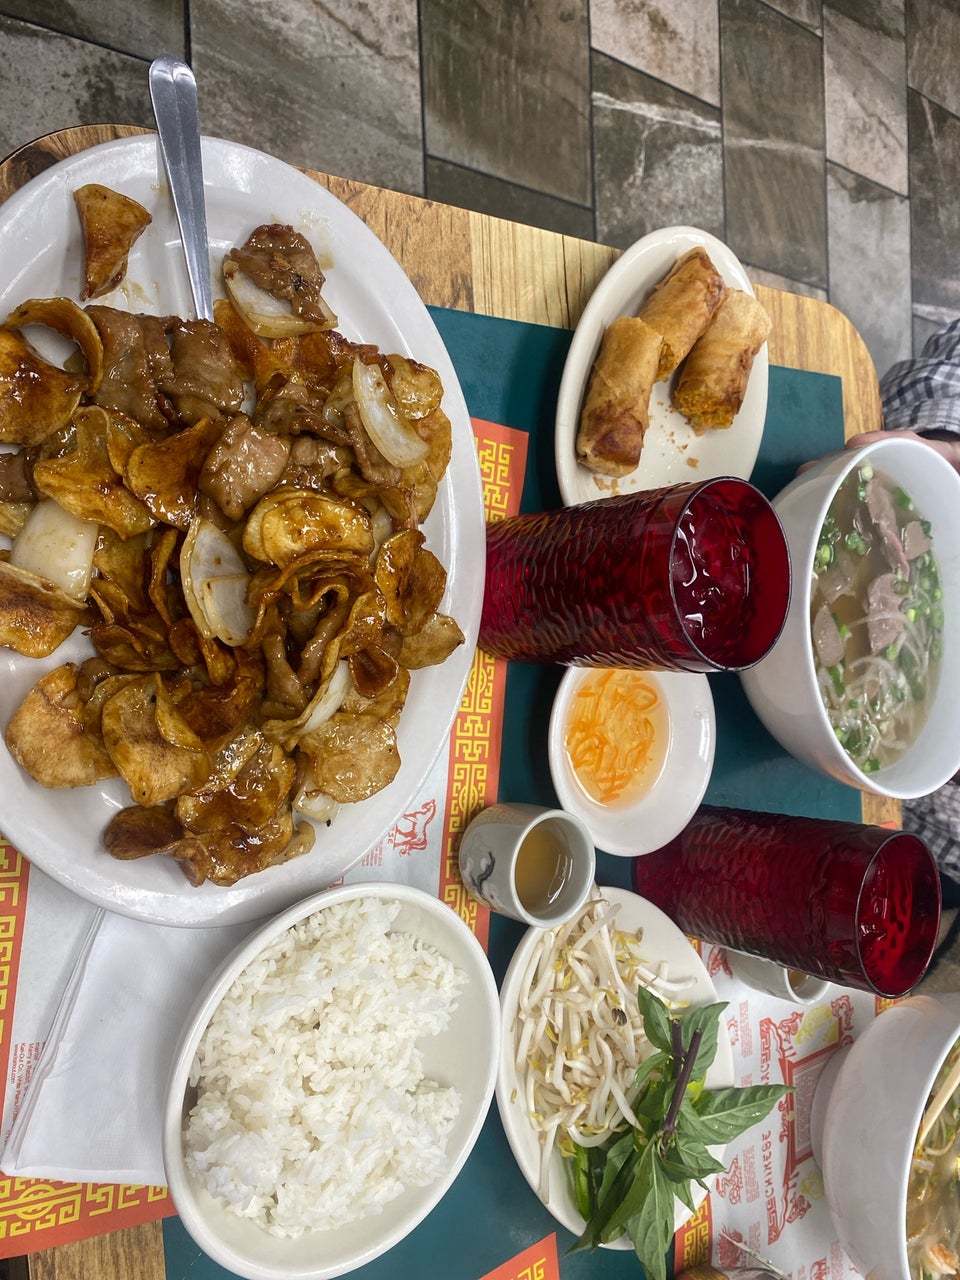 Vietnam House Restaurant